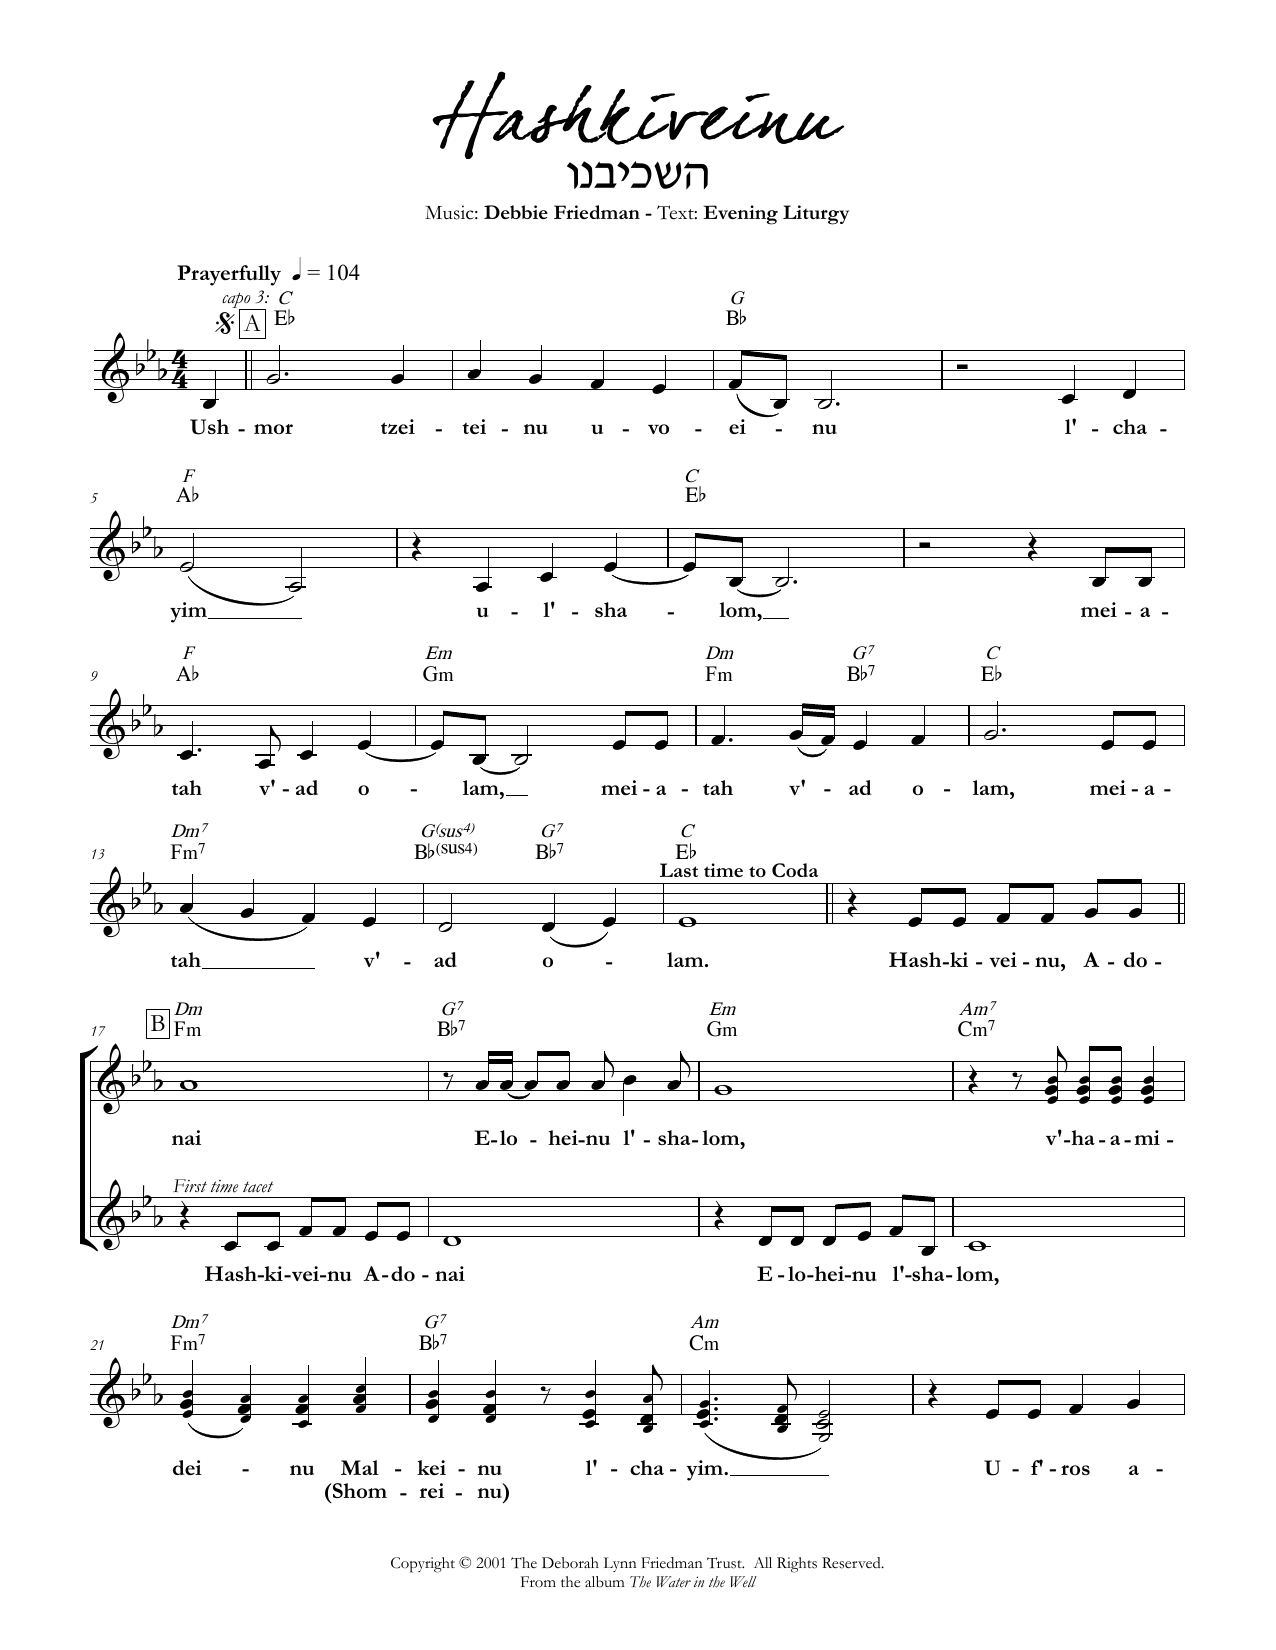 Download Debbie Friedman Hashkiveinu Sheet Music and learn how to play Lead Sheet / Fake Book PDF digital score in minutes